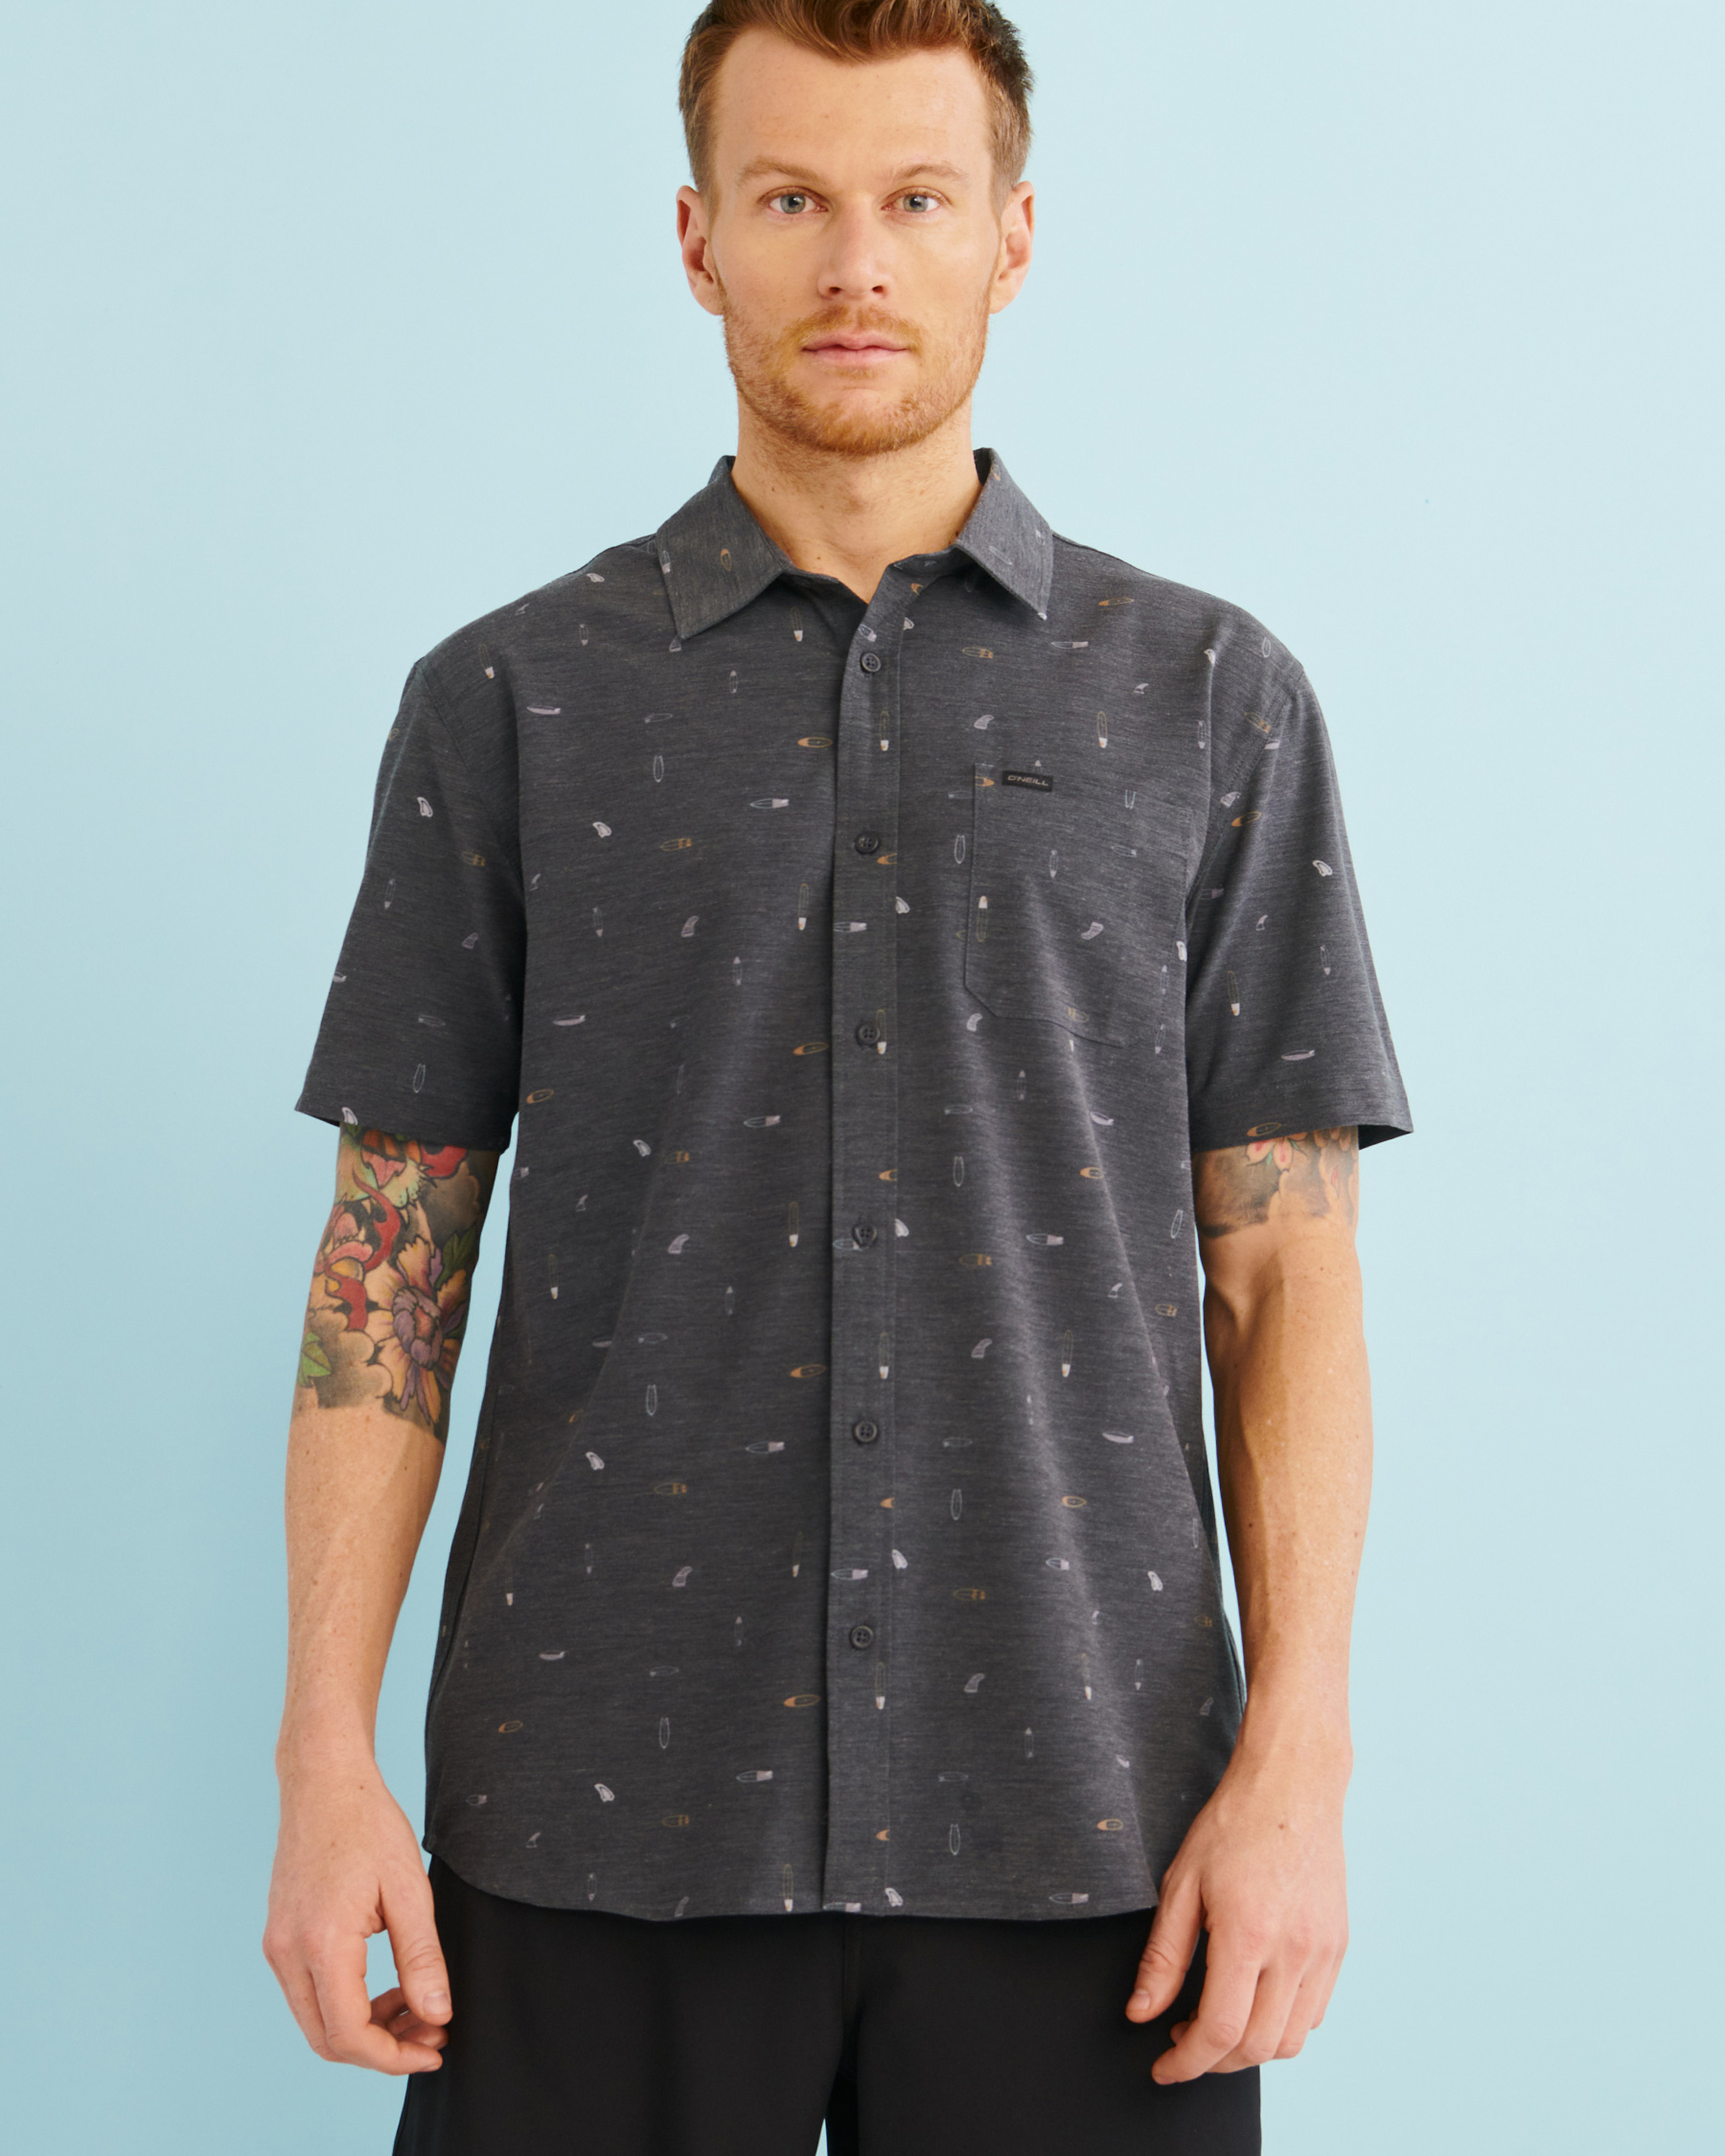 O'NEILL TRVLR TRAVERSE Short Sleeve Shirt Black print SP2104107 - View4